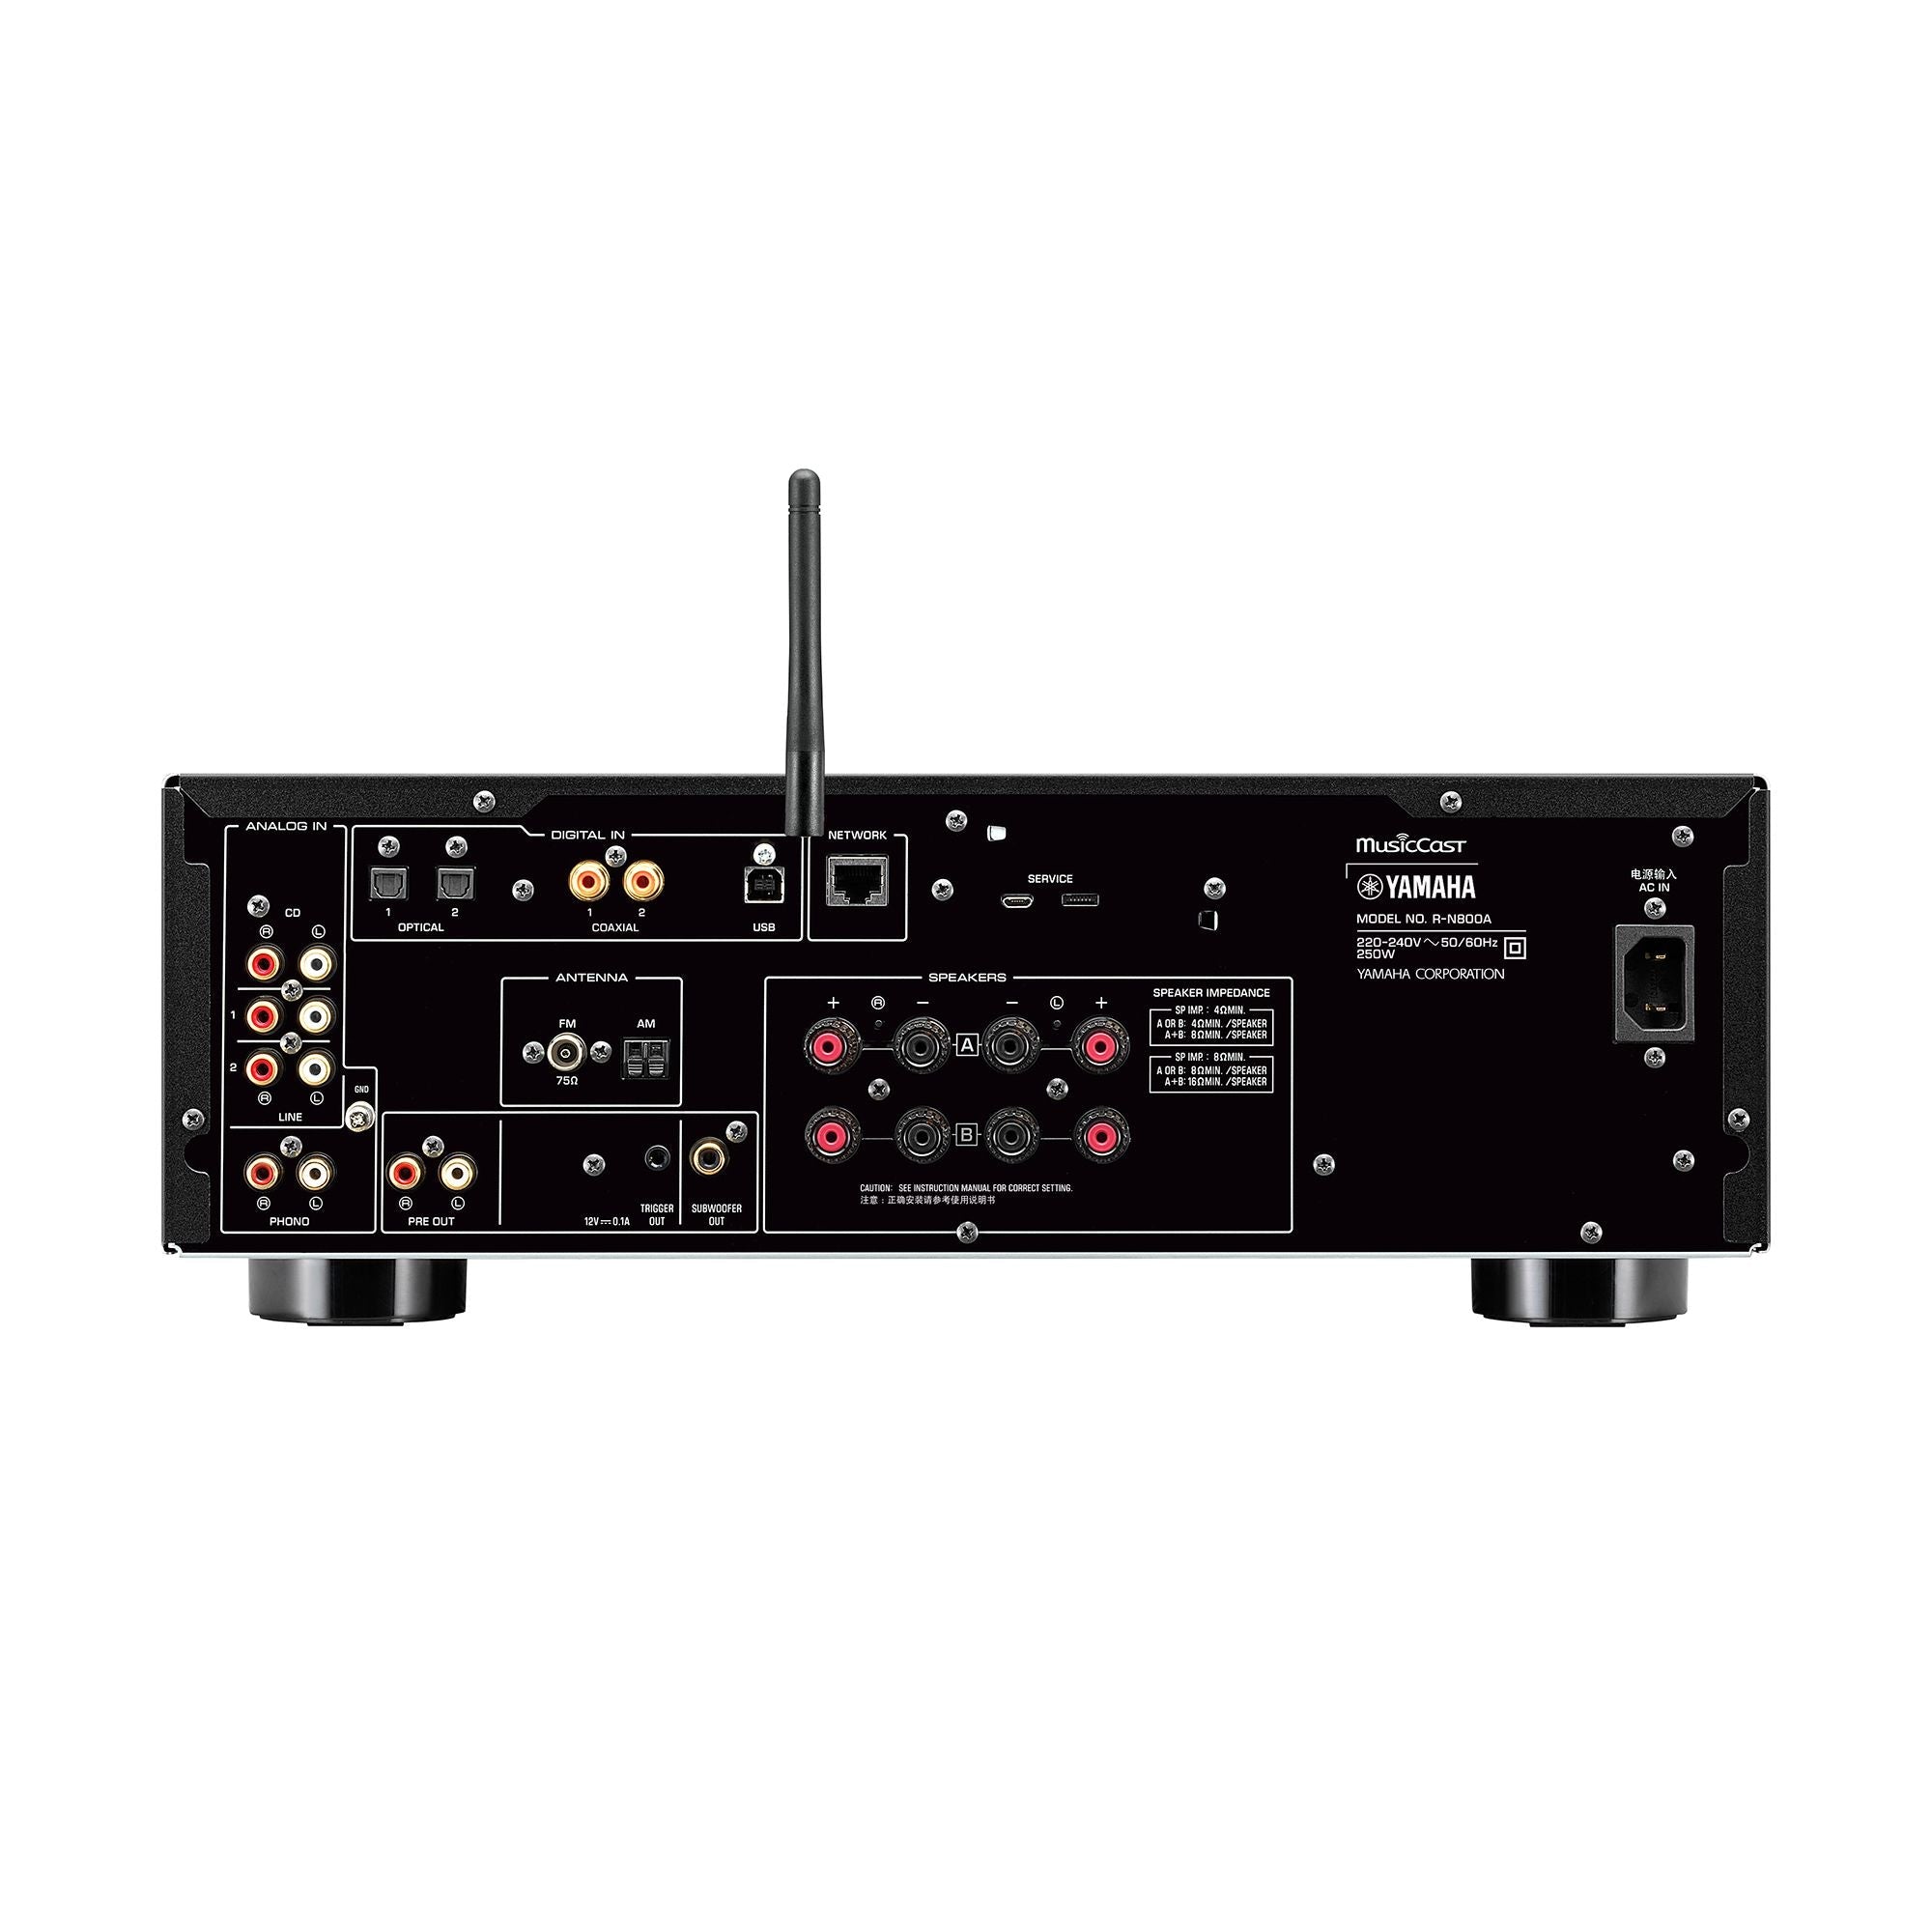 Yamaha - R-N800A - Network Stereo Receiver Australia